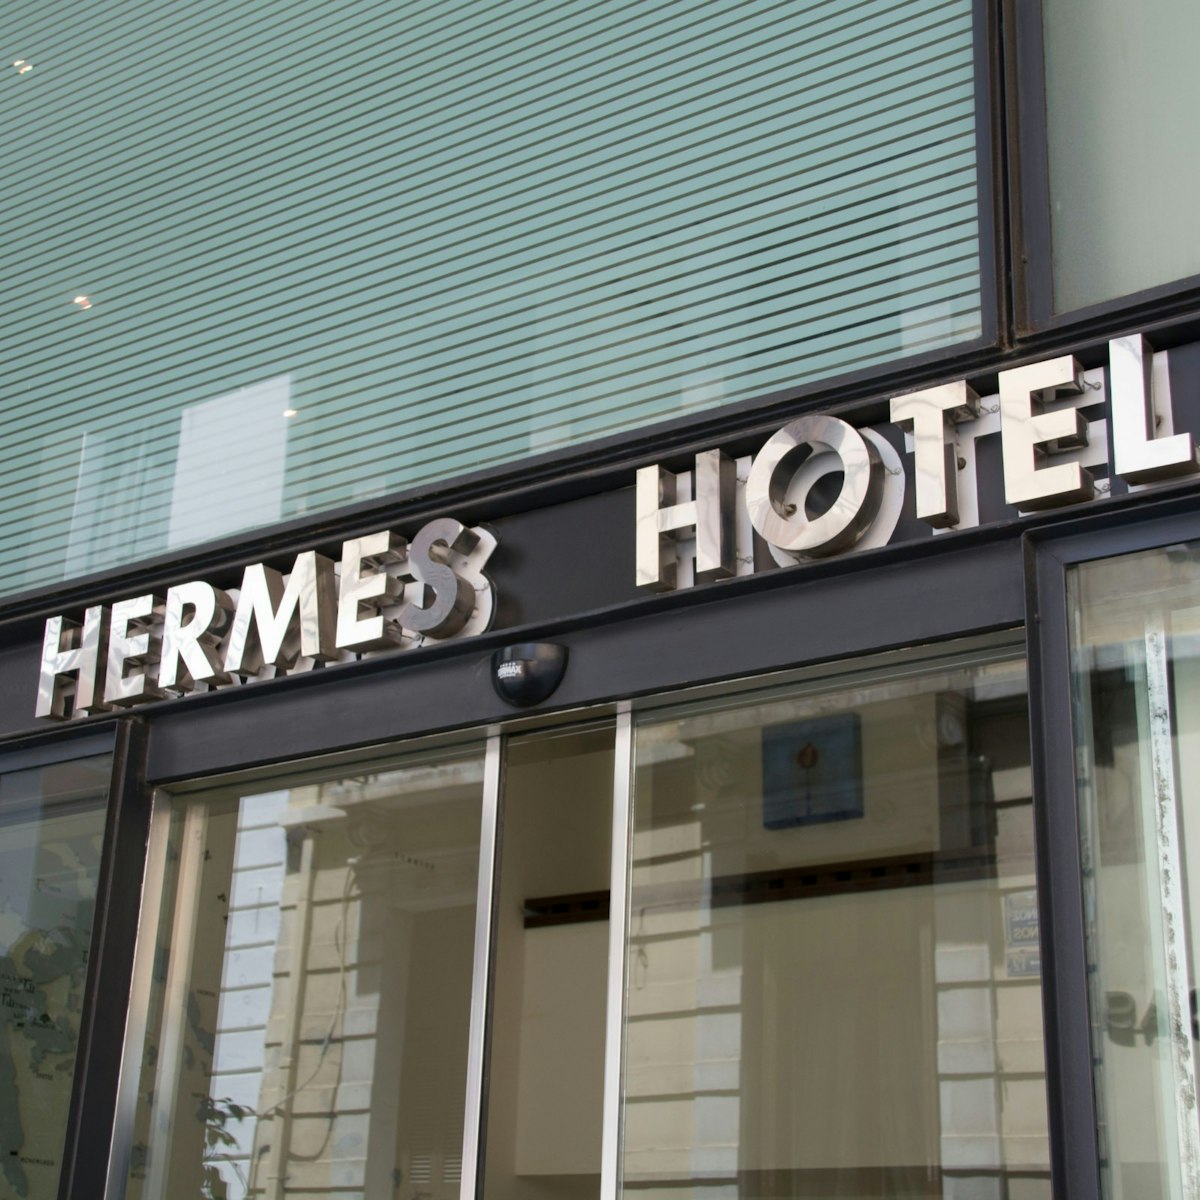 The facade of Hermes hotel in Plaka neighbourhood